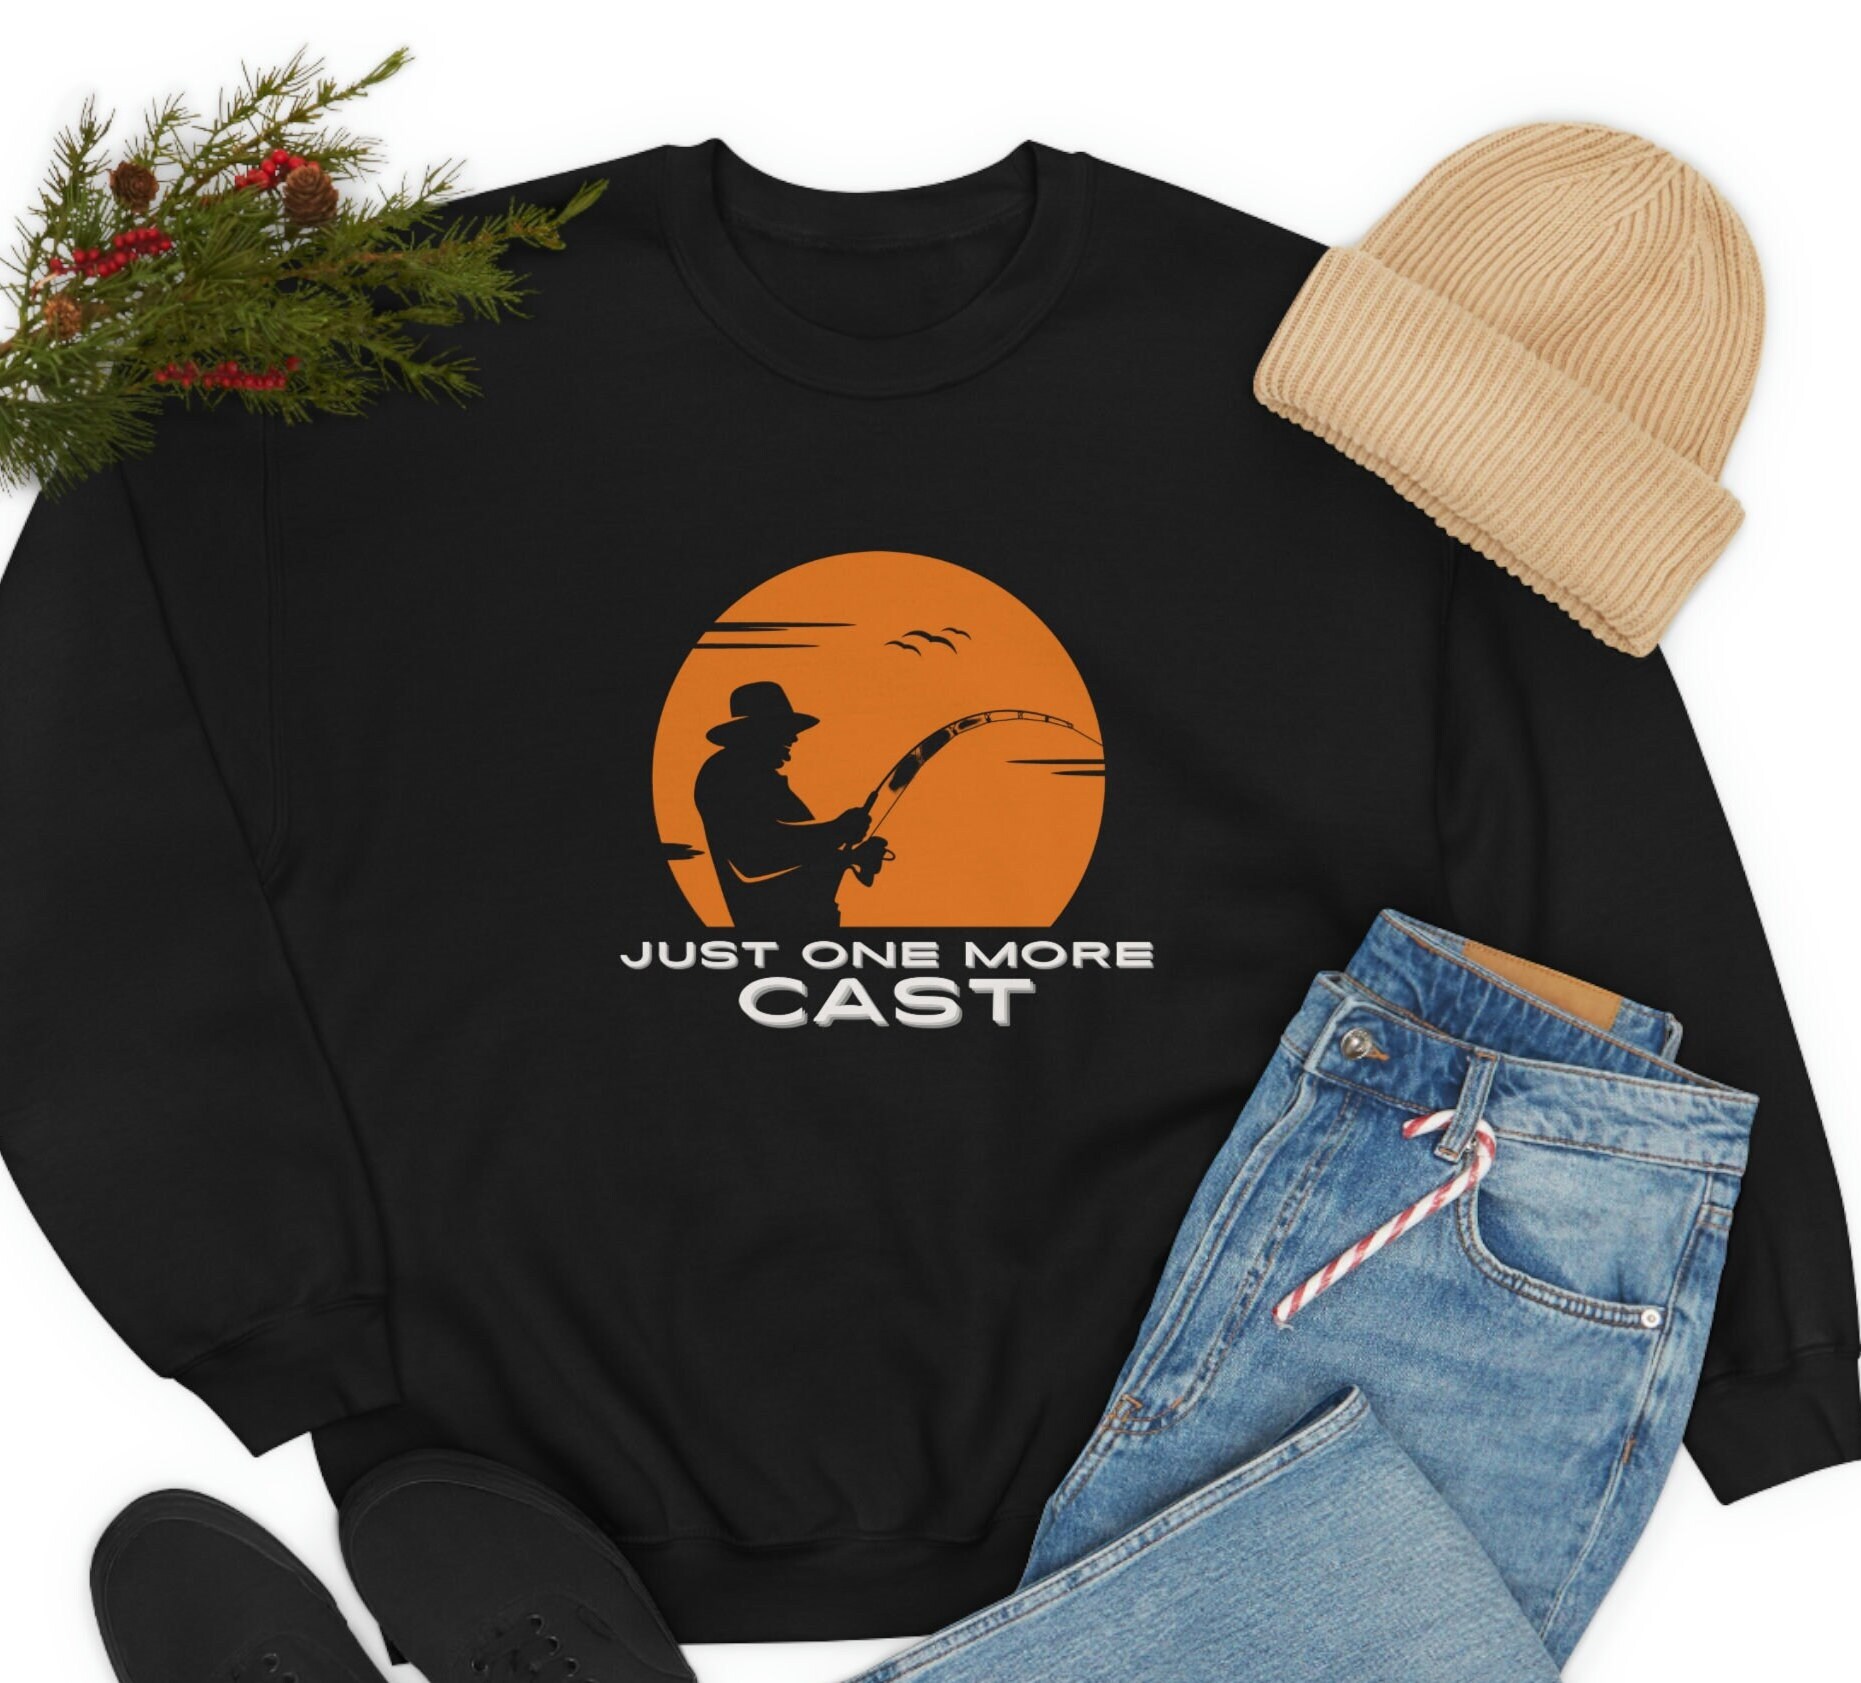 Funny Fishing Sweatshirt Gift for Men Fishing Graphic Tee